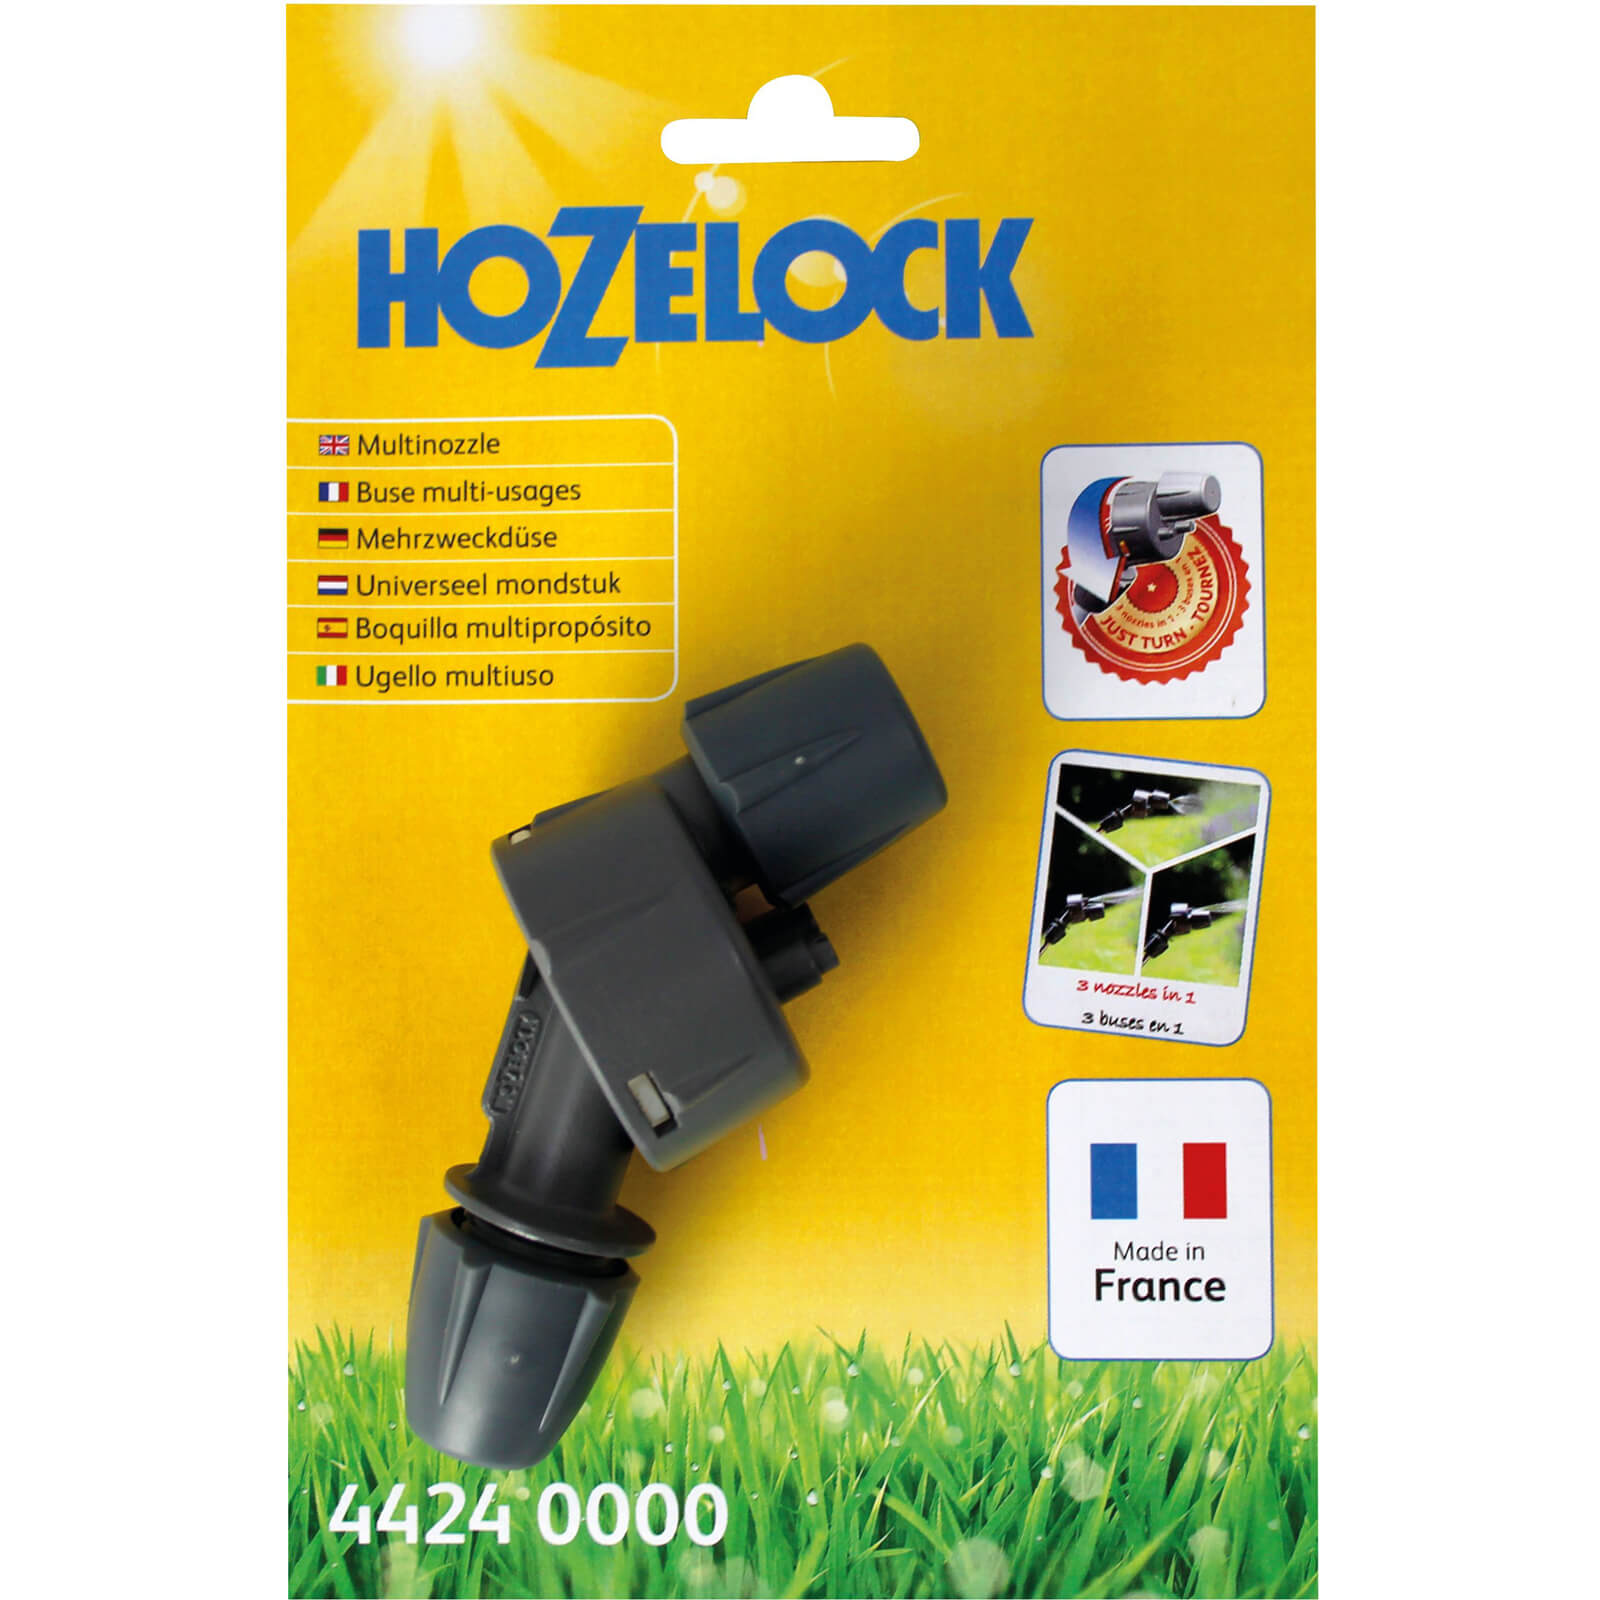 Image of Hozelock Multi Jet Nozzle for Pressure Sprayers